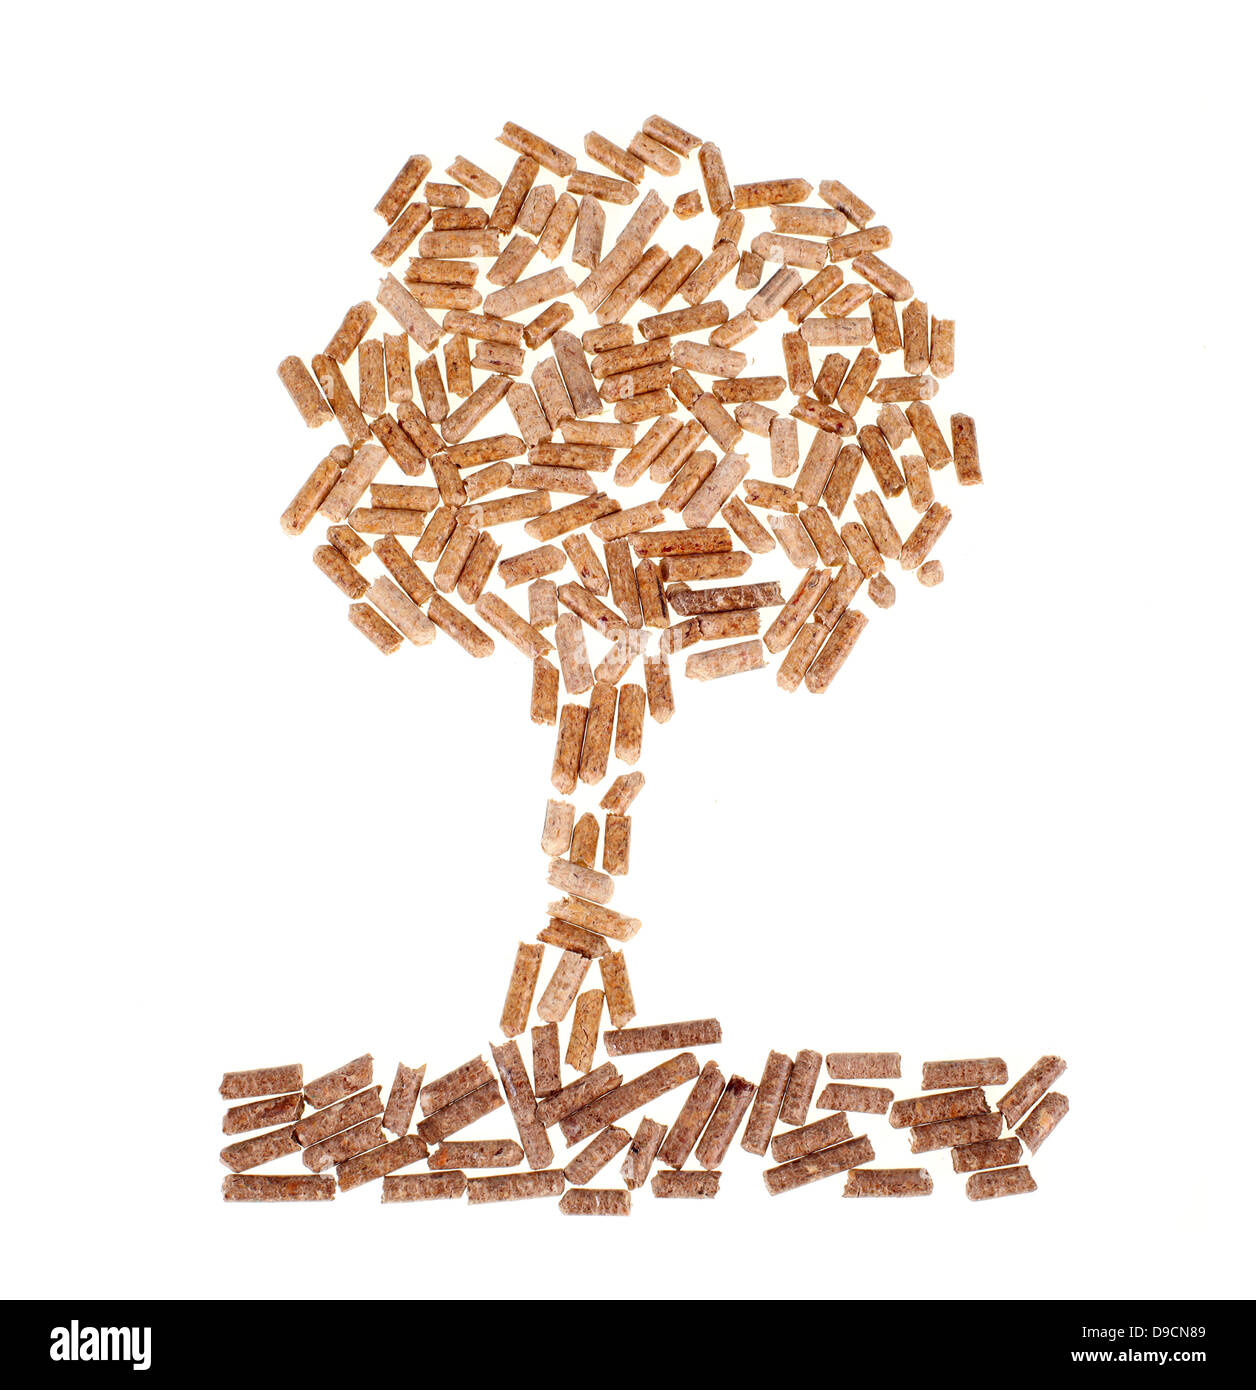 Tree of wood pellet on white background Stock Photo